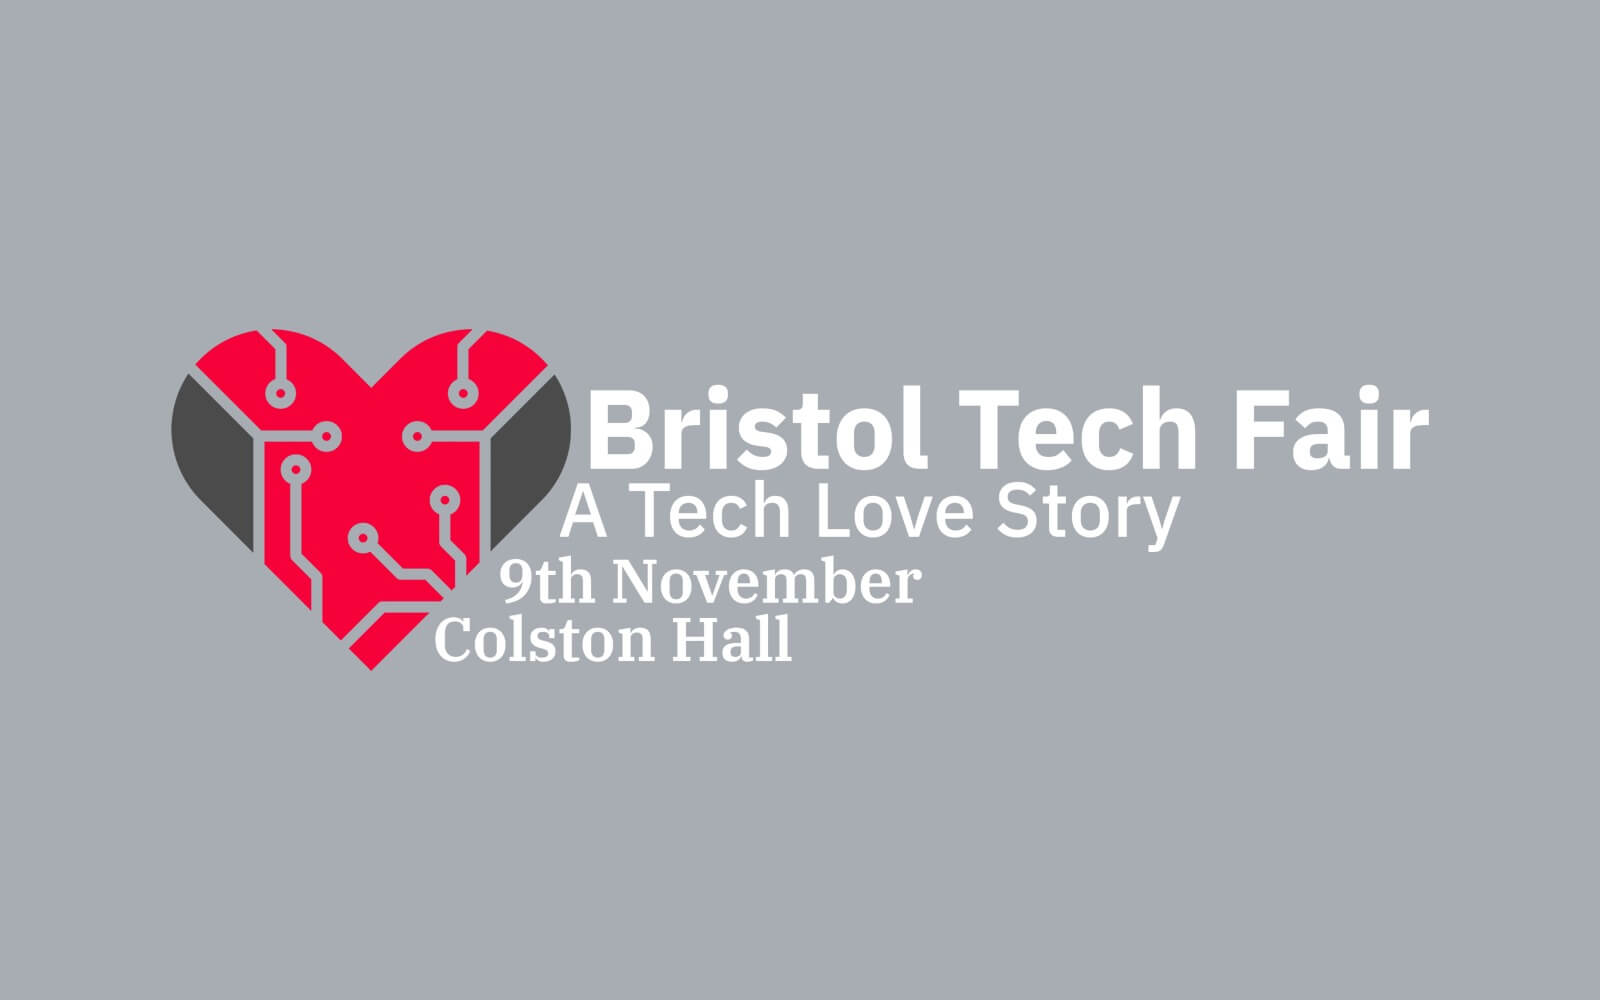 Bristol Tech Fair. A Tech Love Story. 9th November 2019.